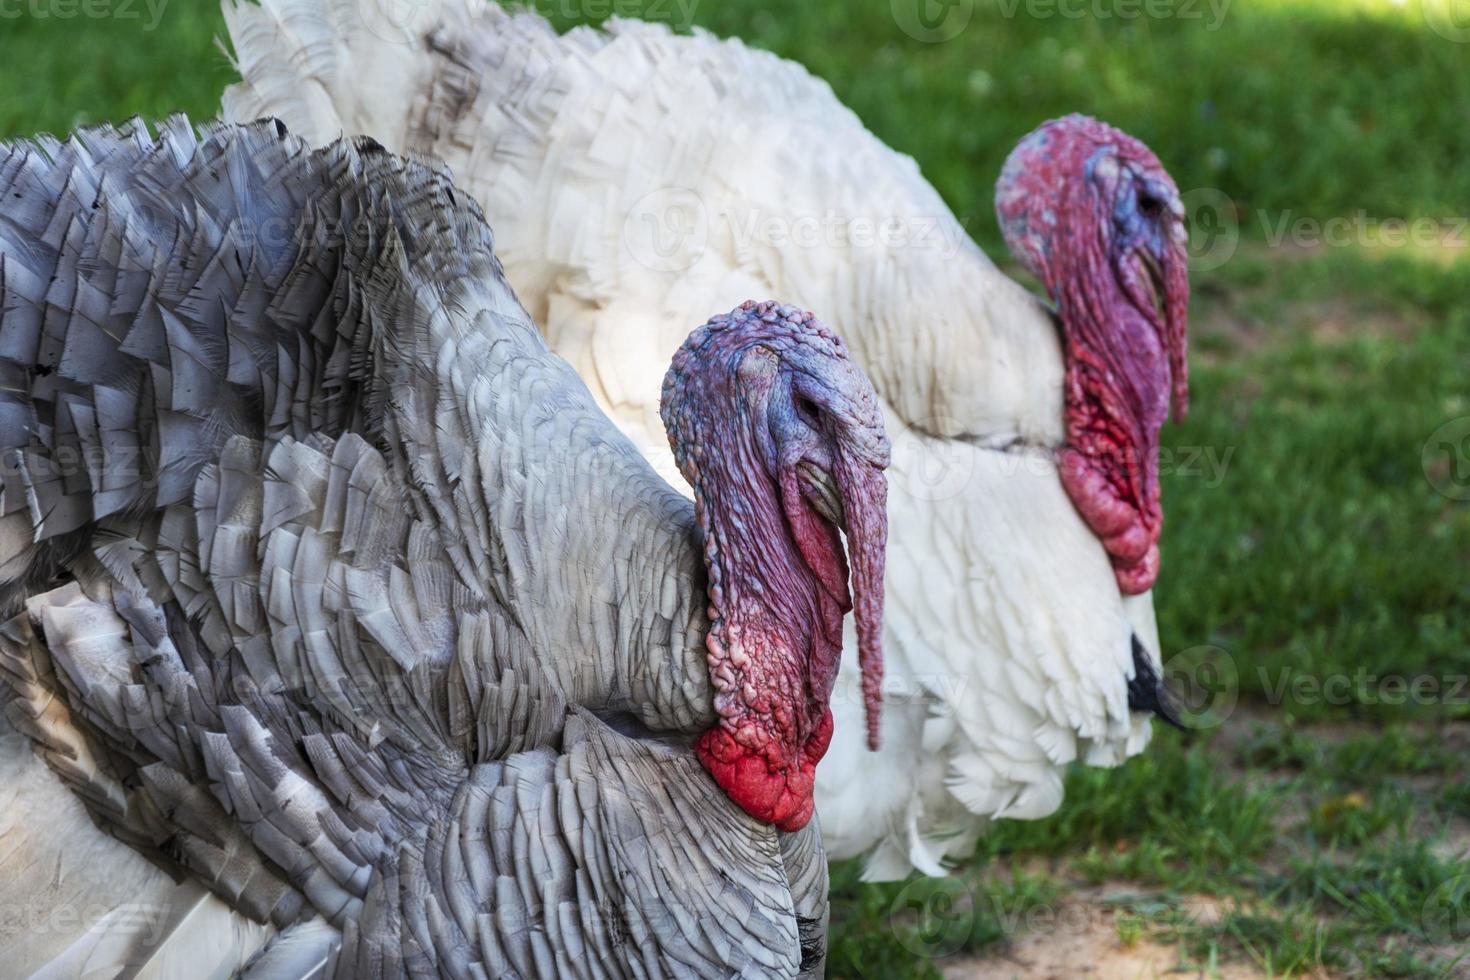 scary turkeys on the green grass, spanish chickens, turkish chickens, live turkey photo